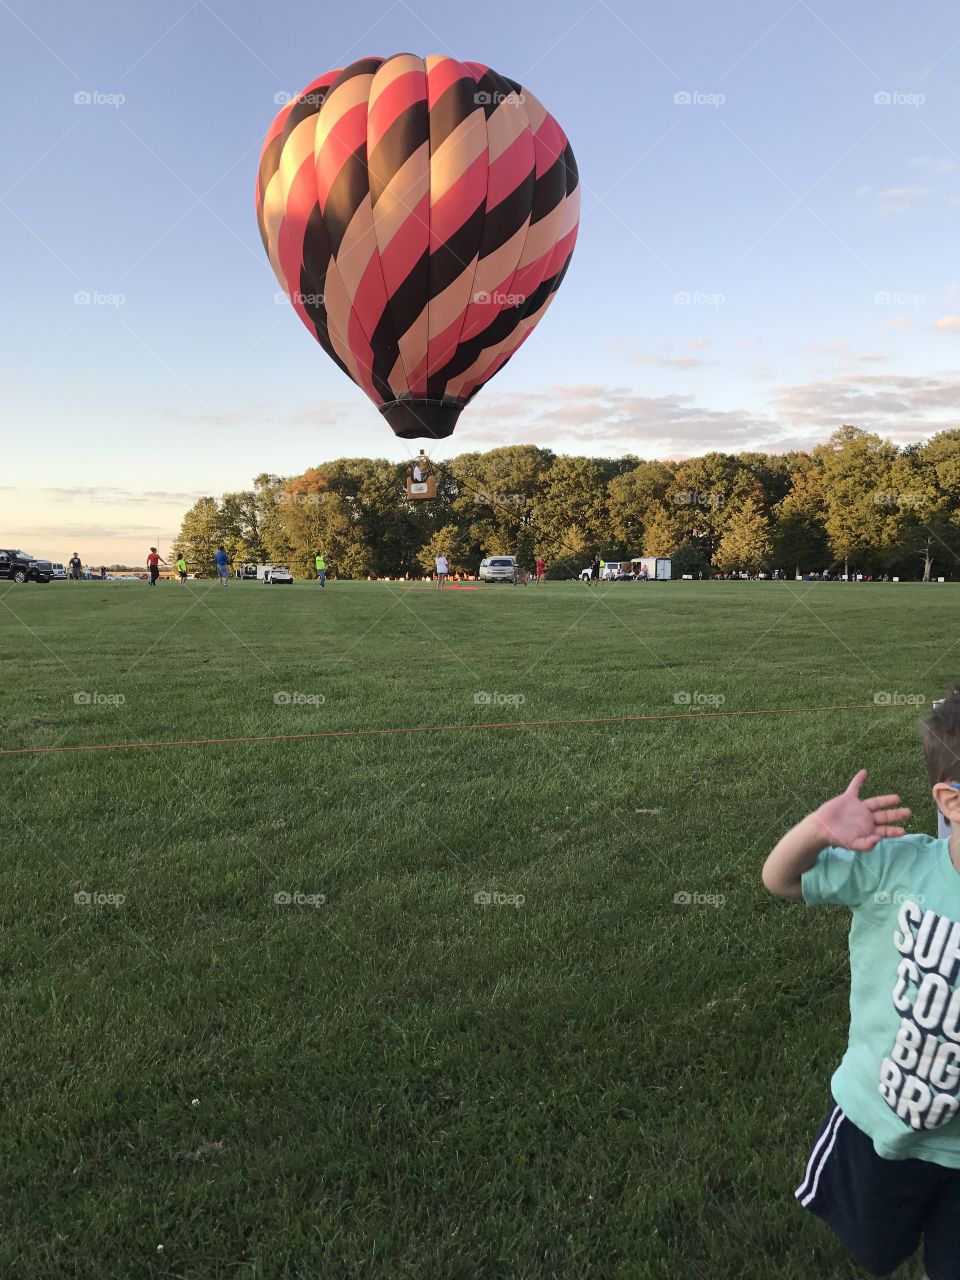 Hot air balloon taking flight 